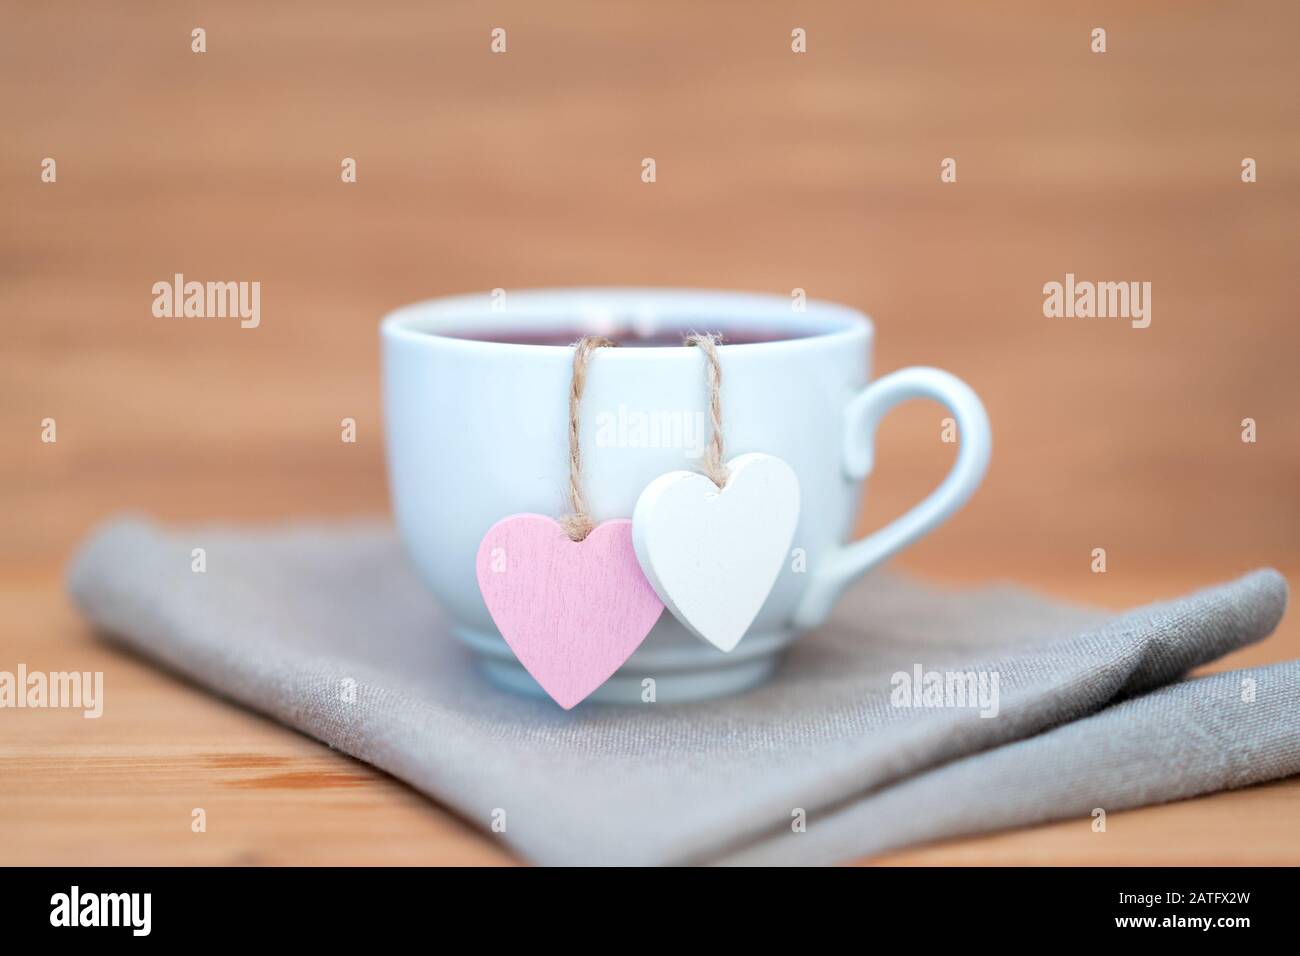 Valentines Day Love Heart Of Hearts Retro Enamel Mug Cup